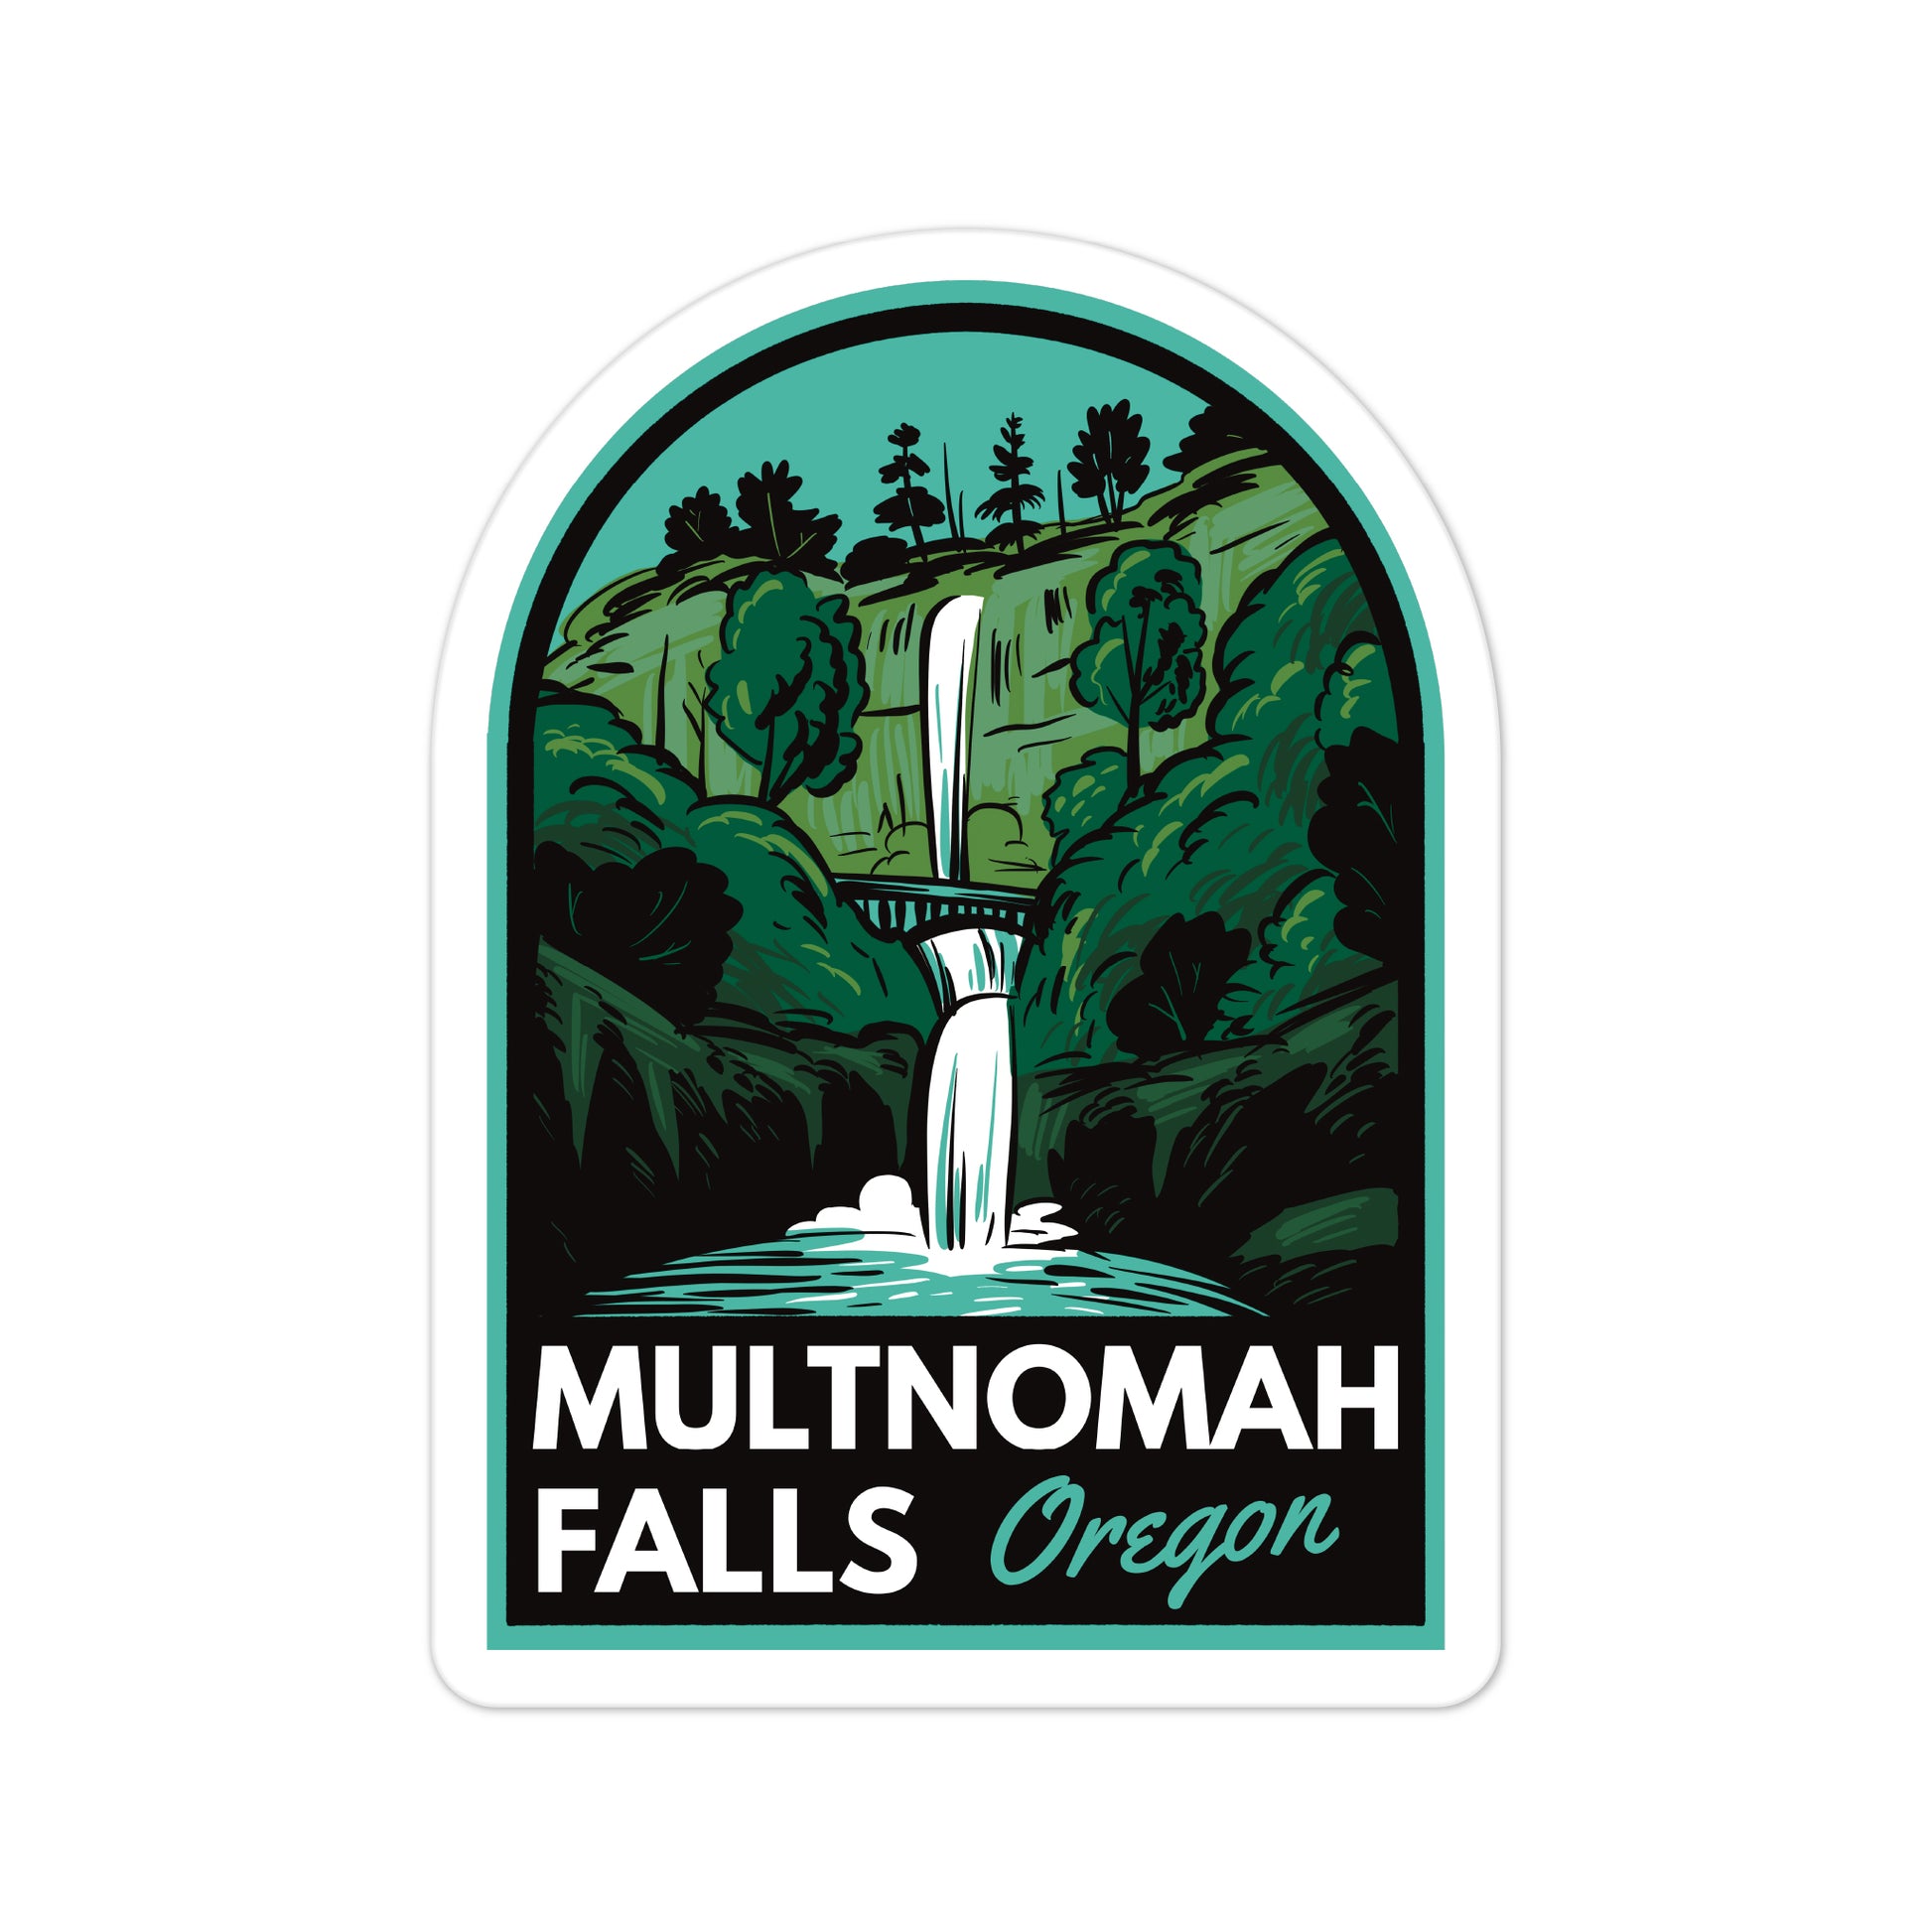 A sticker of Multnomah Falls Oregon